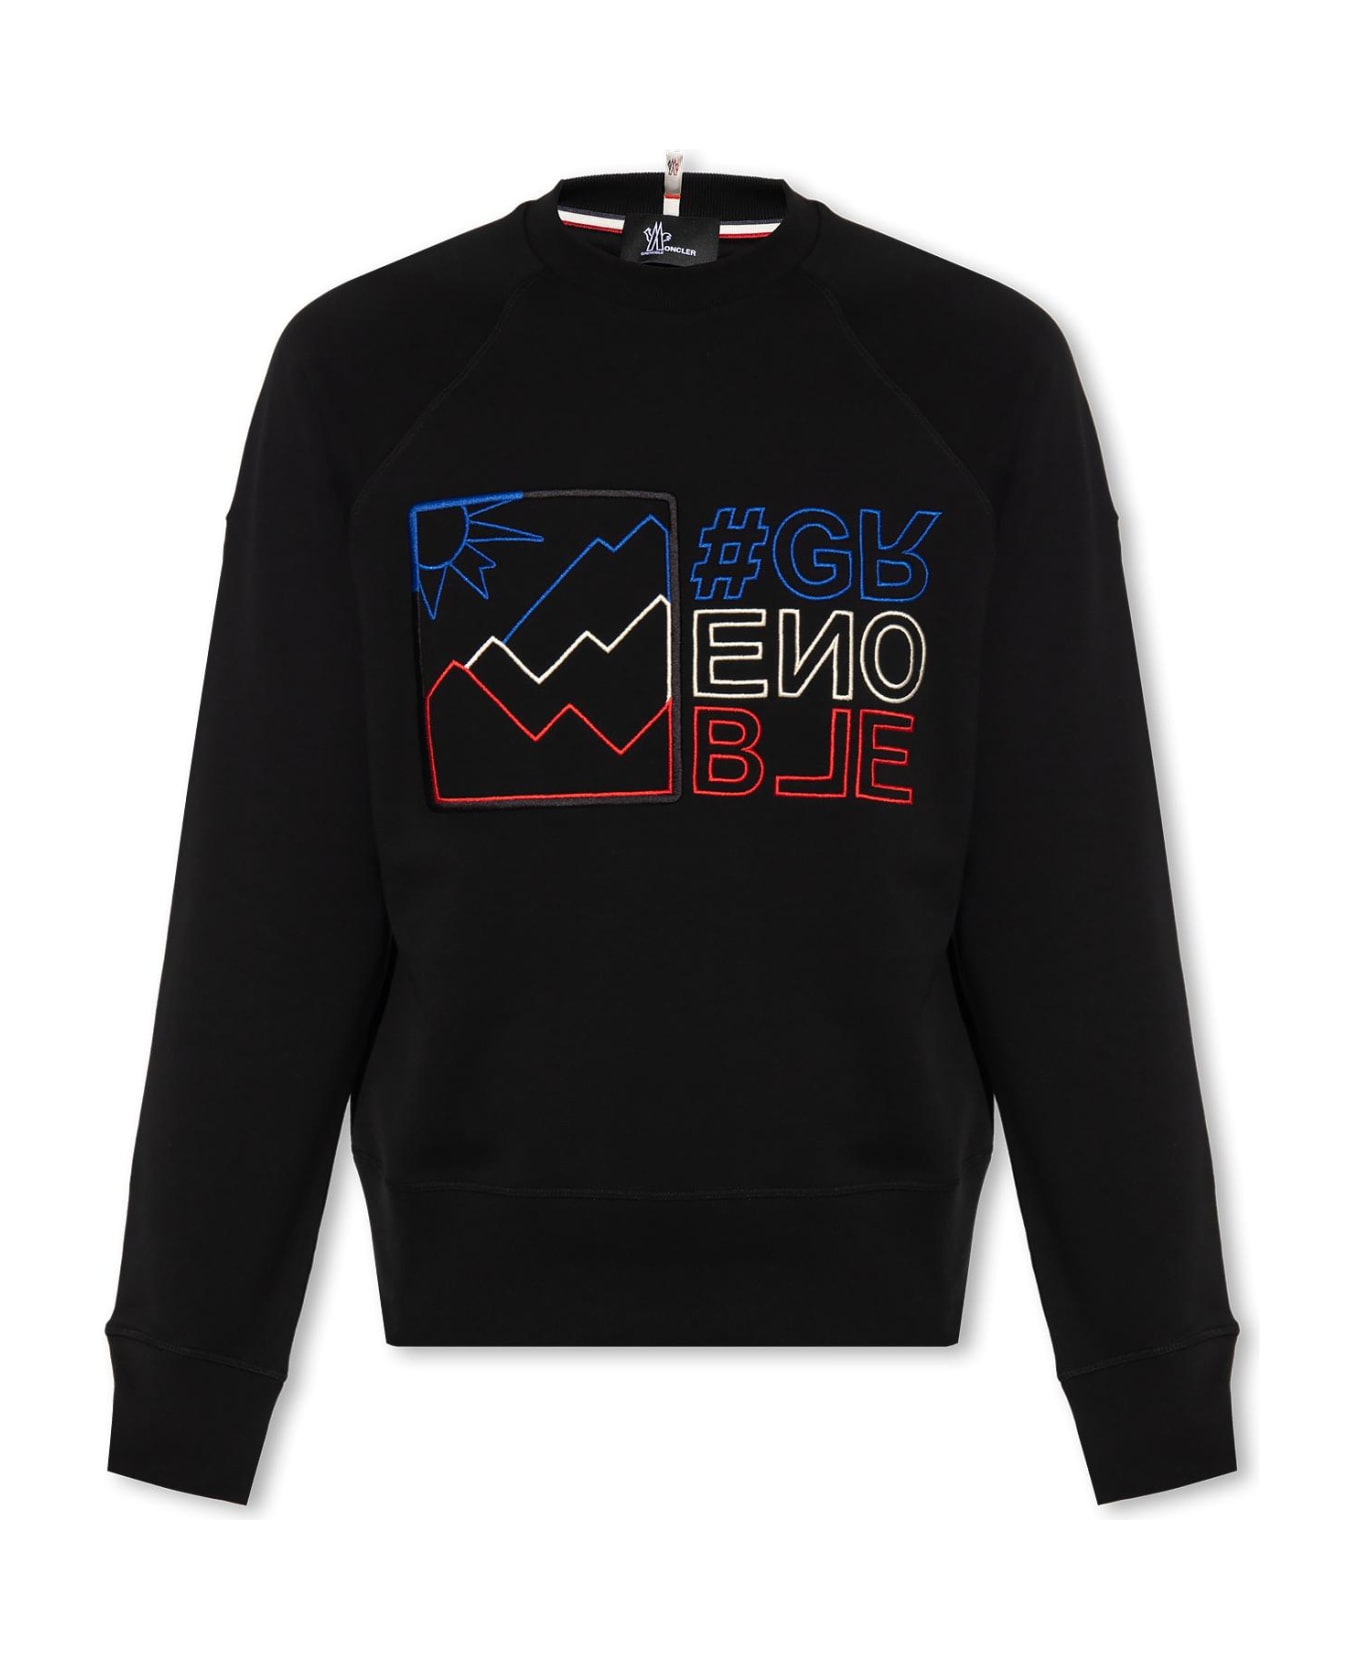 Moncler Grenoble Embroidered Sweatshirt